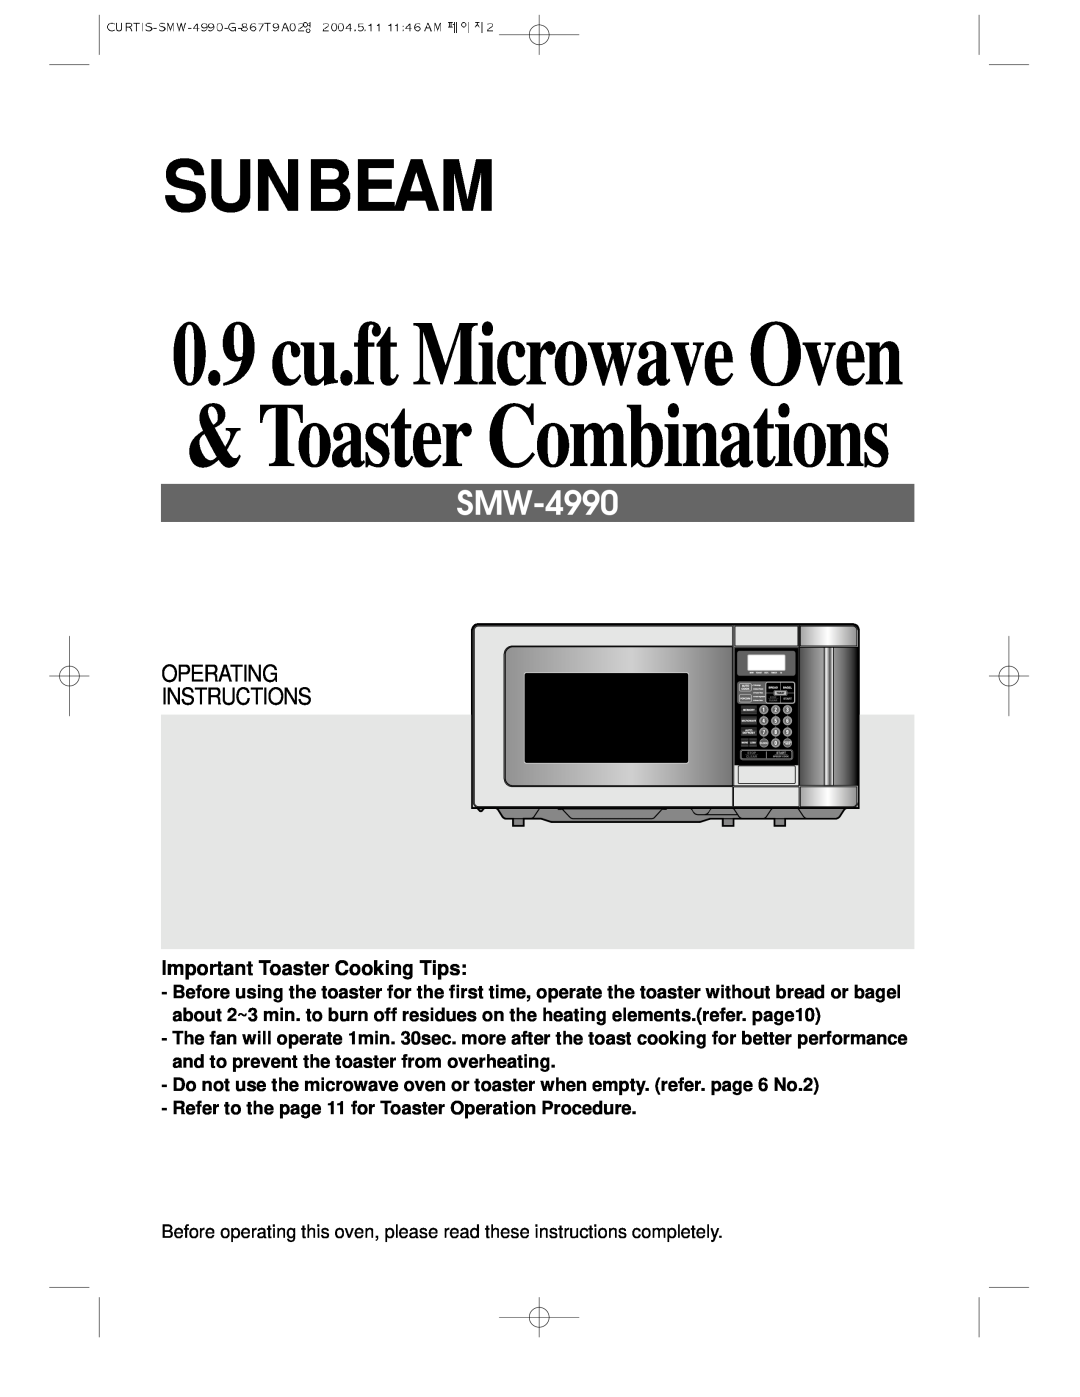 Sunbeam SMW-4990 manual Sunbeam, 0.9cu.ft Microwave Oven & Toaster Combinations, Operating Instructions 